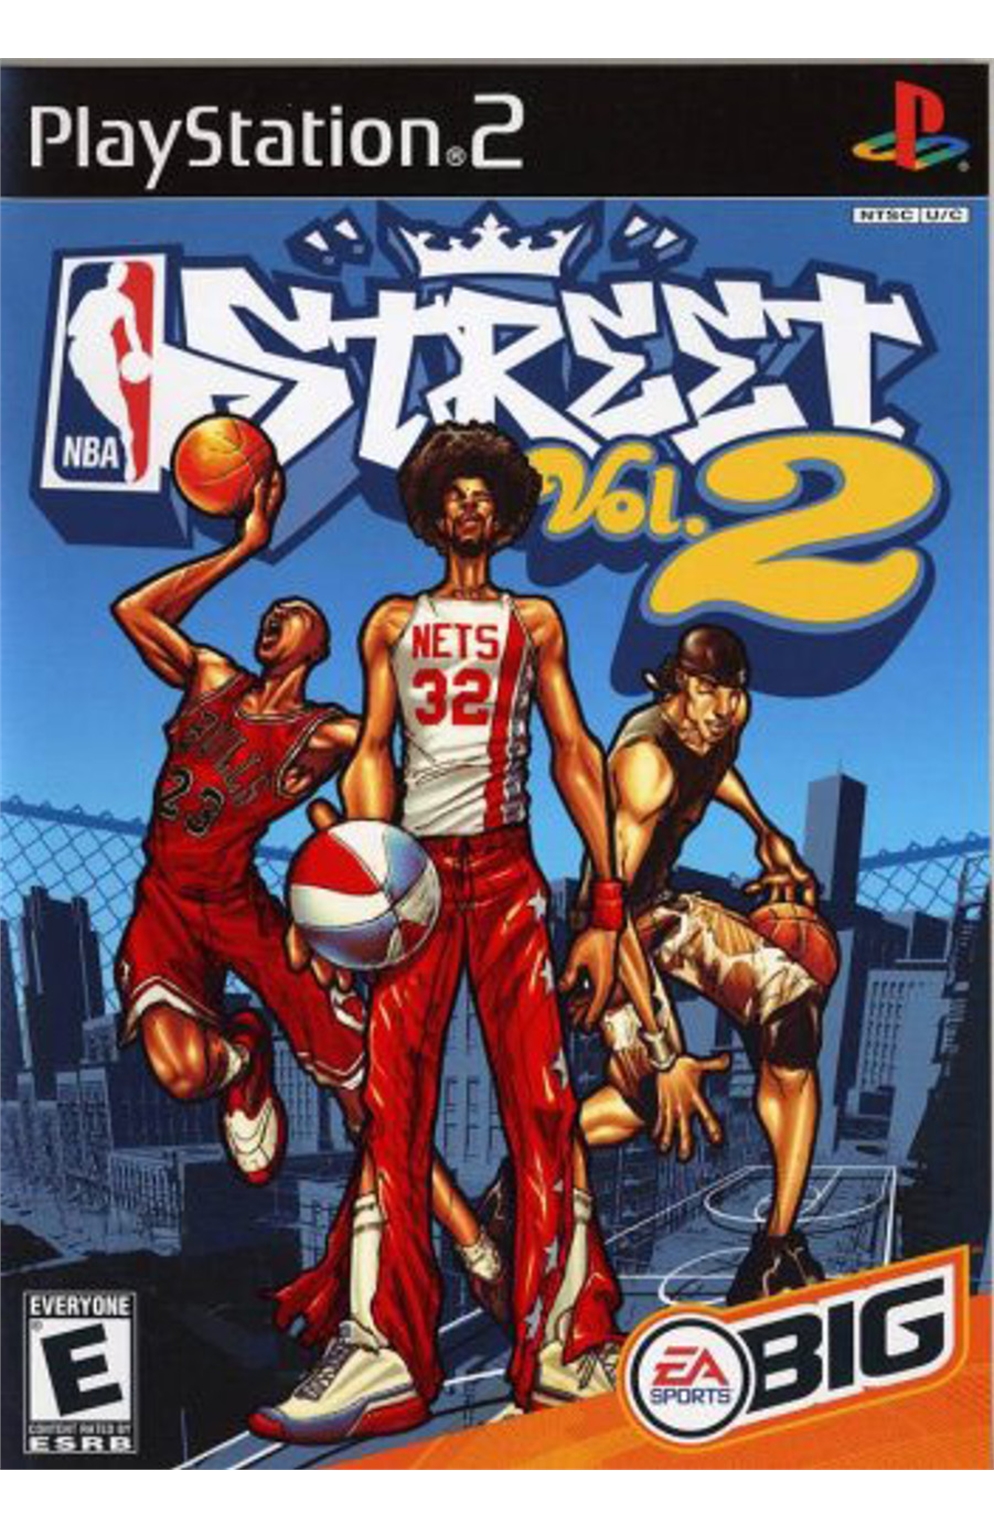 Playstation 2 Ps2 Nba Street Volume 2